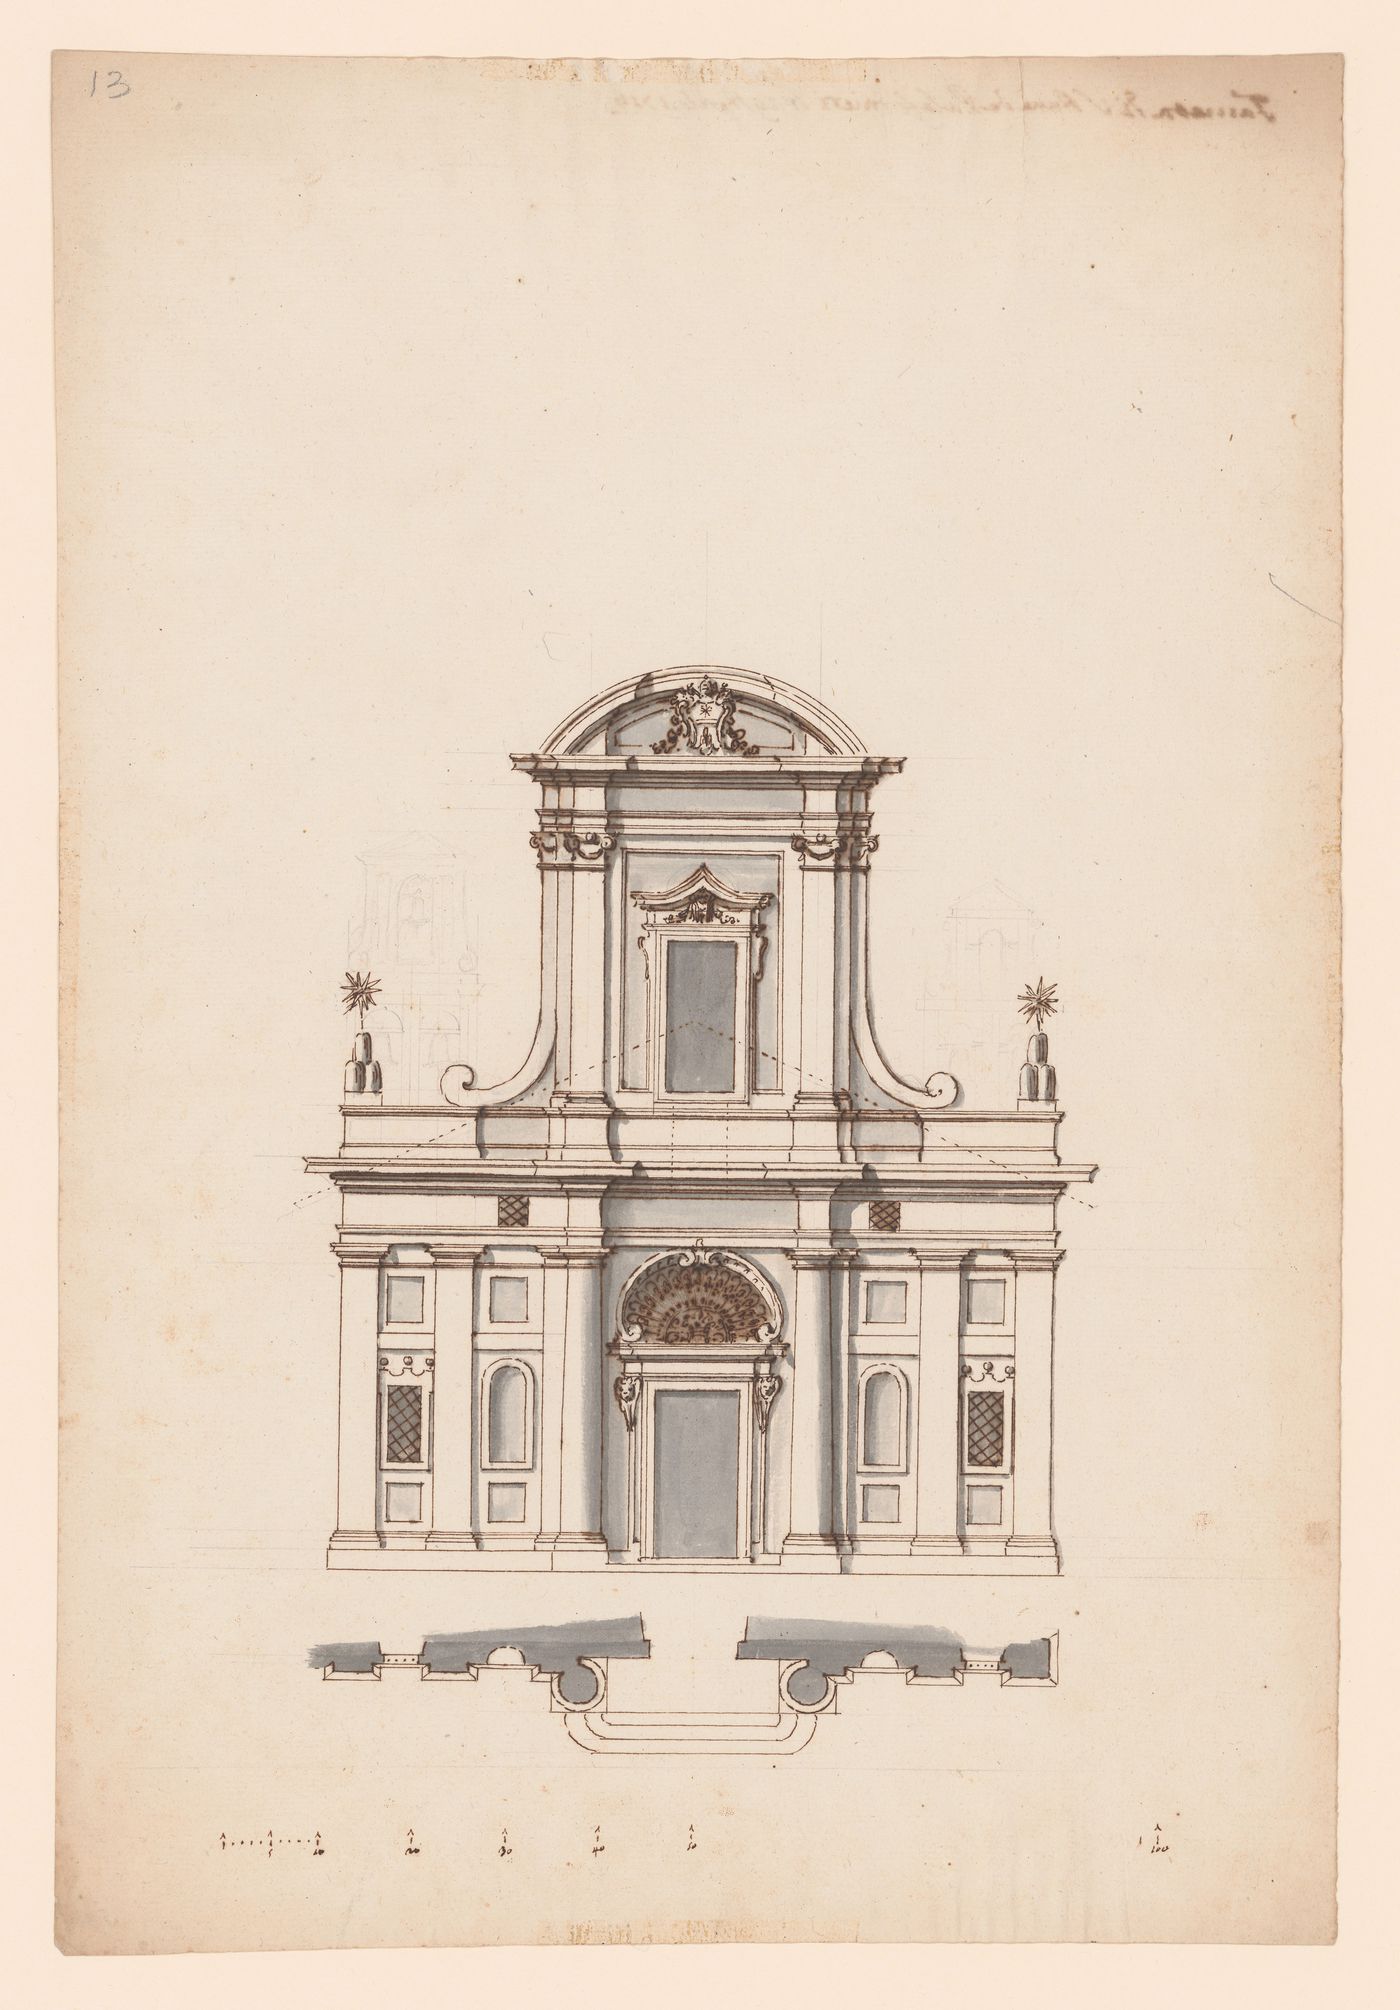 Elevation and plan for the façade for Sant'Anna dei Palafrenieri, Rome